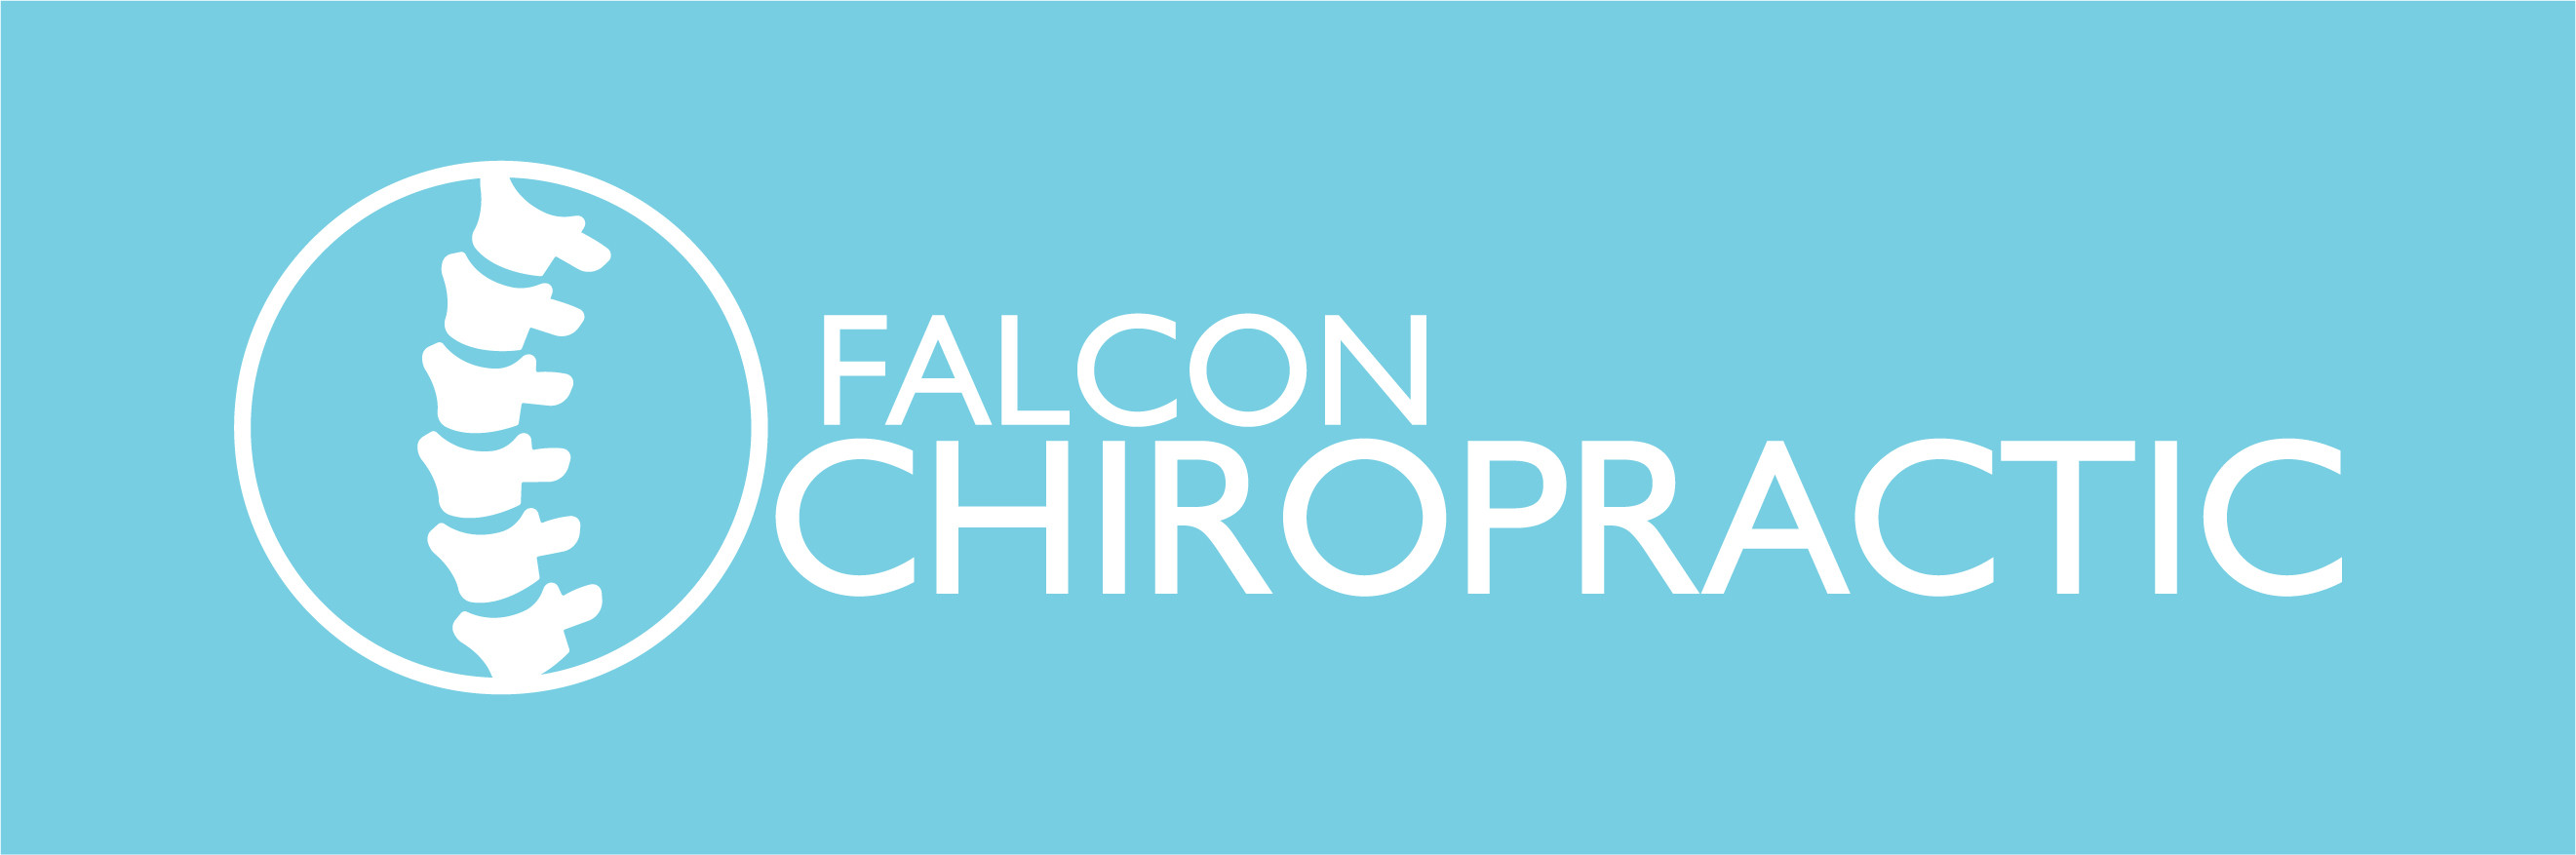 Falcon Chiropractic logo